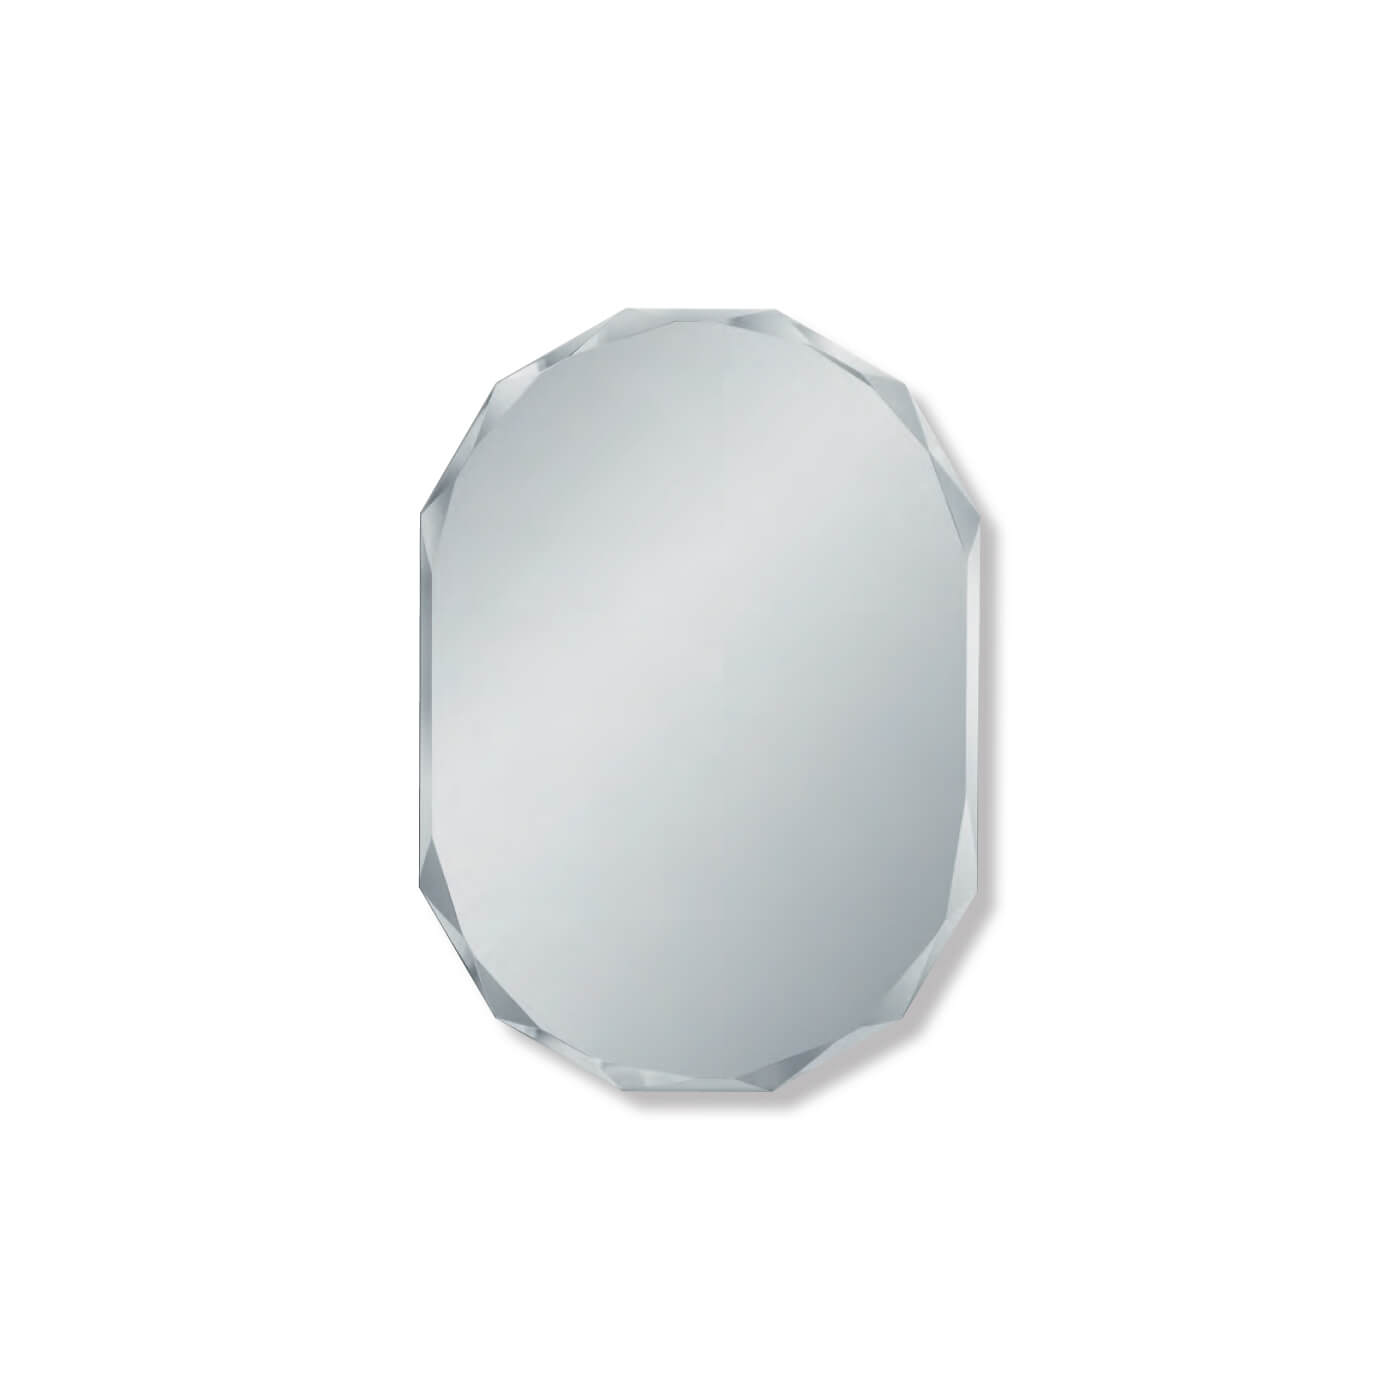 Cauti o oglinda fatetata LIV 50x70, design modern, elegant, pentru camera de zi, dormitor sau hol?